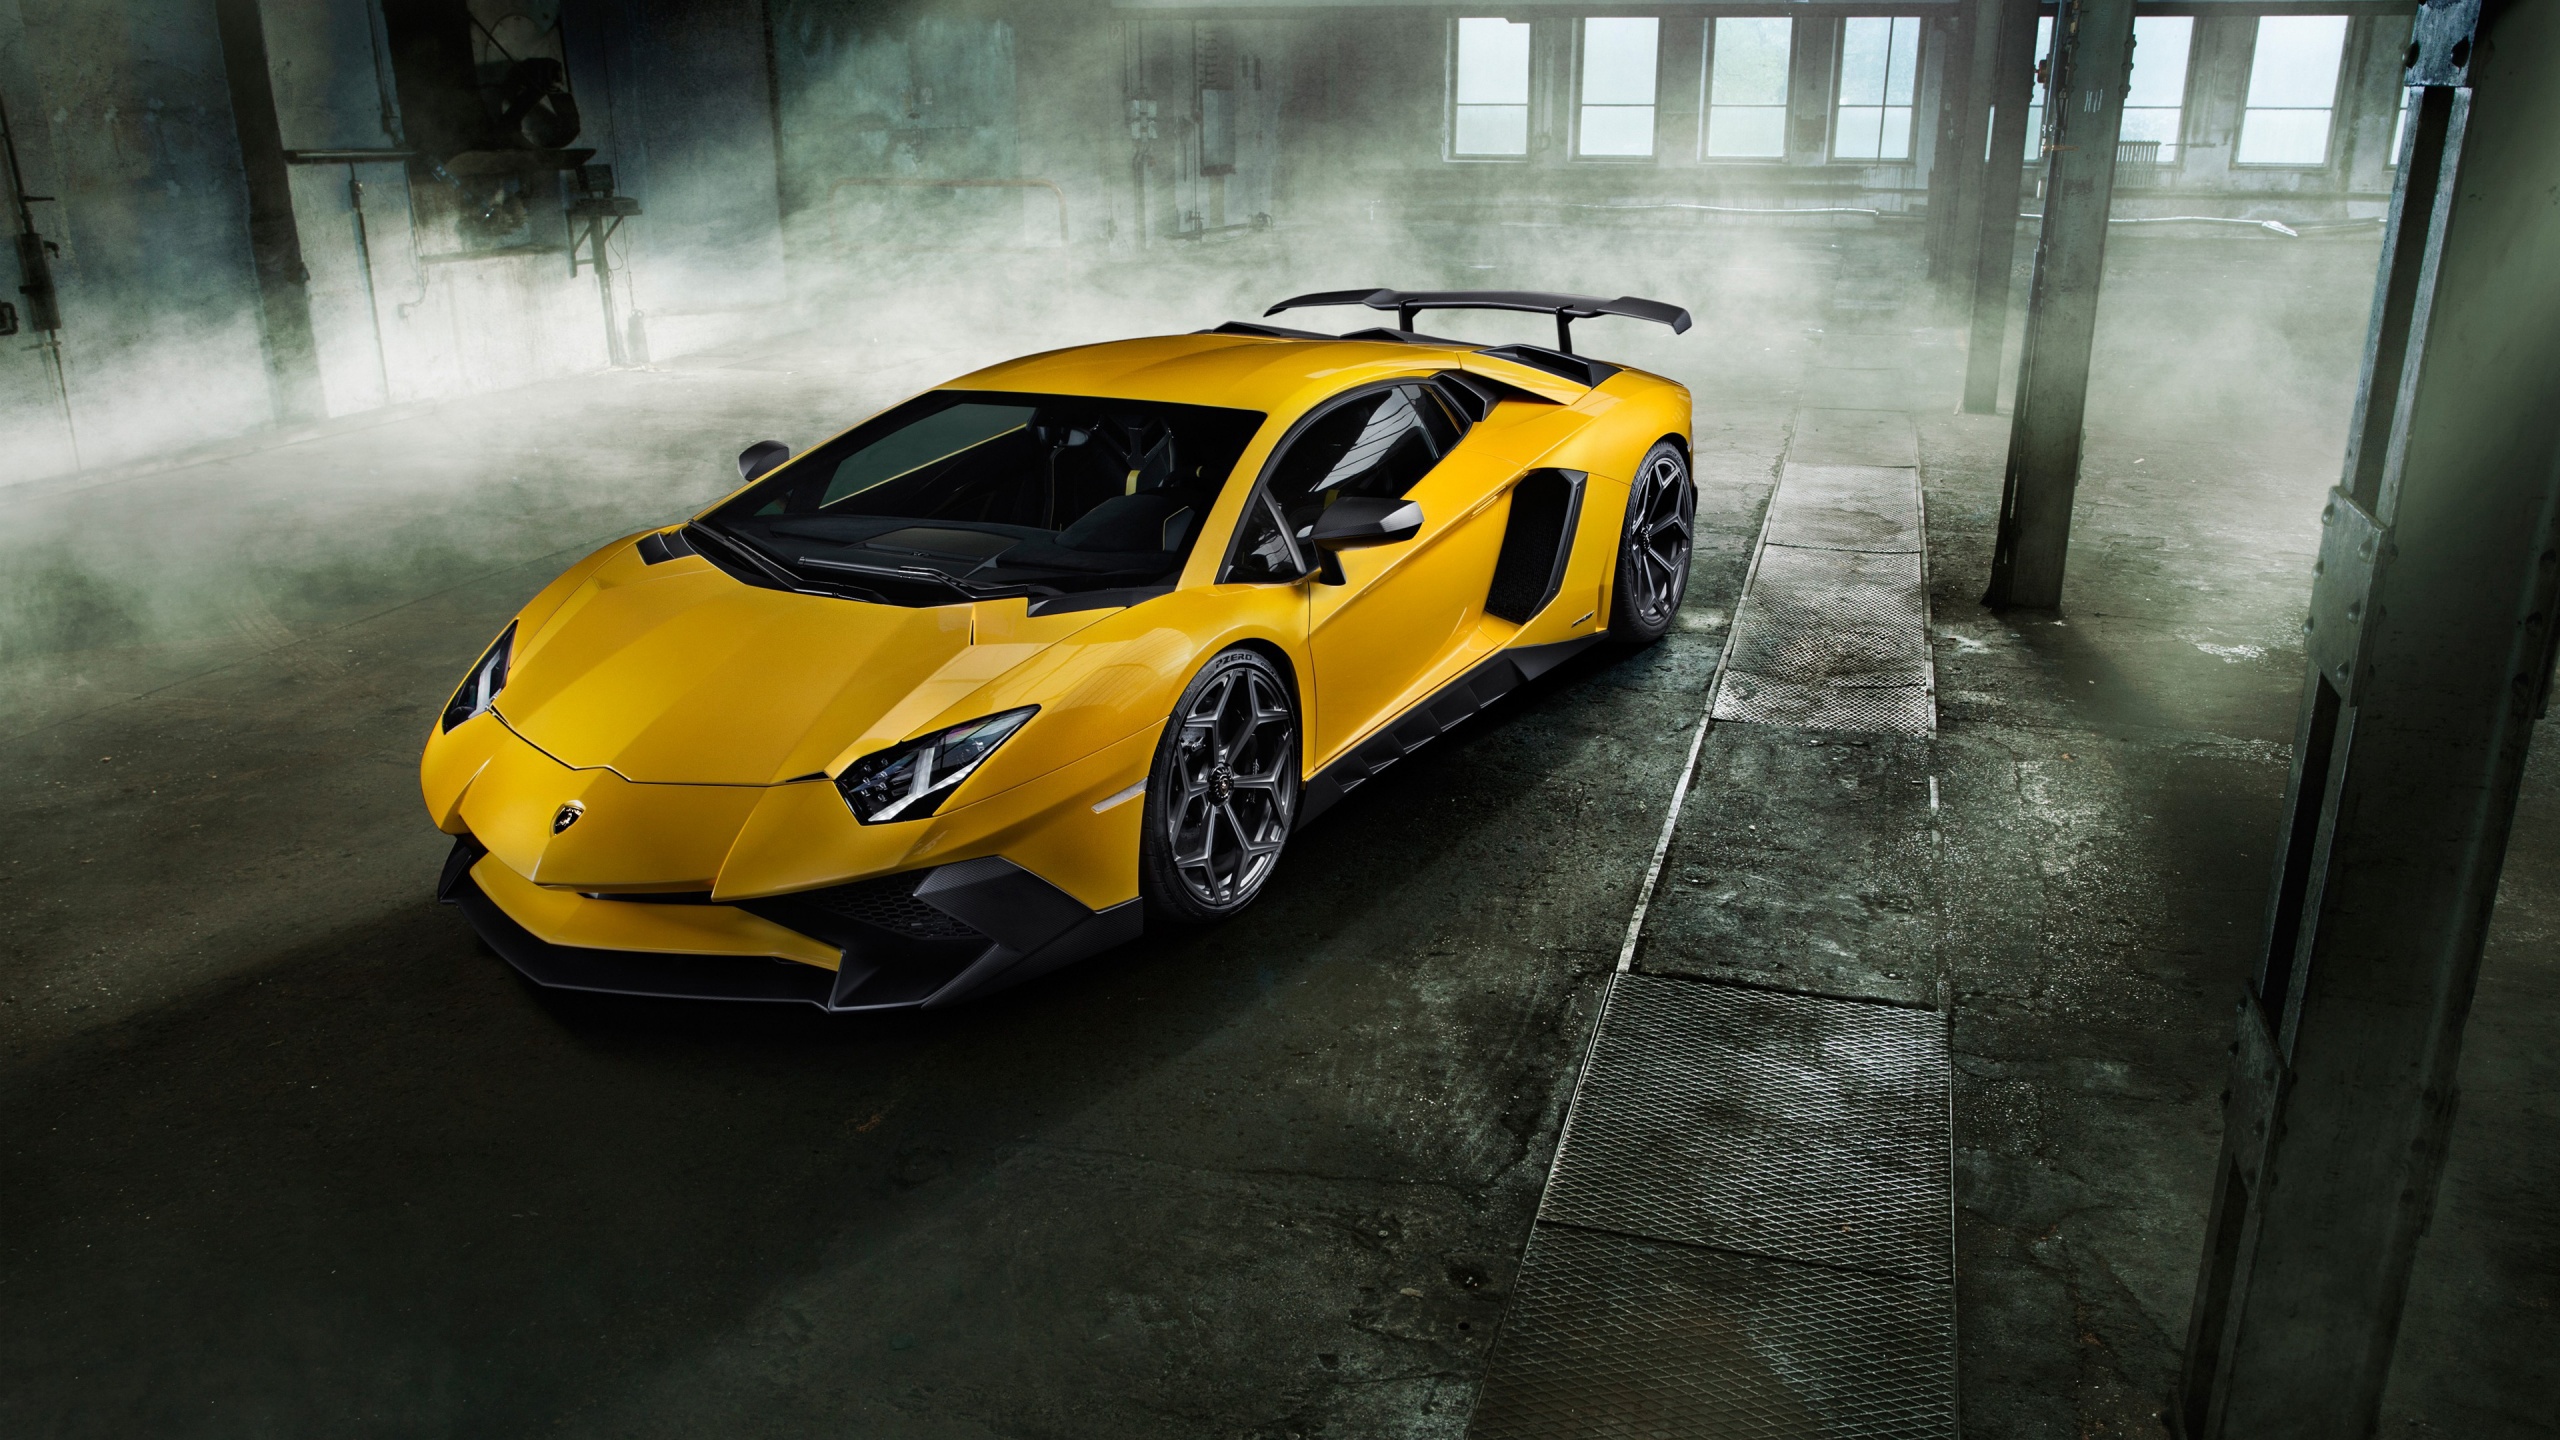 Lamborghini Aventador Wallpapers Images Photos Pictures ...